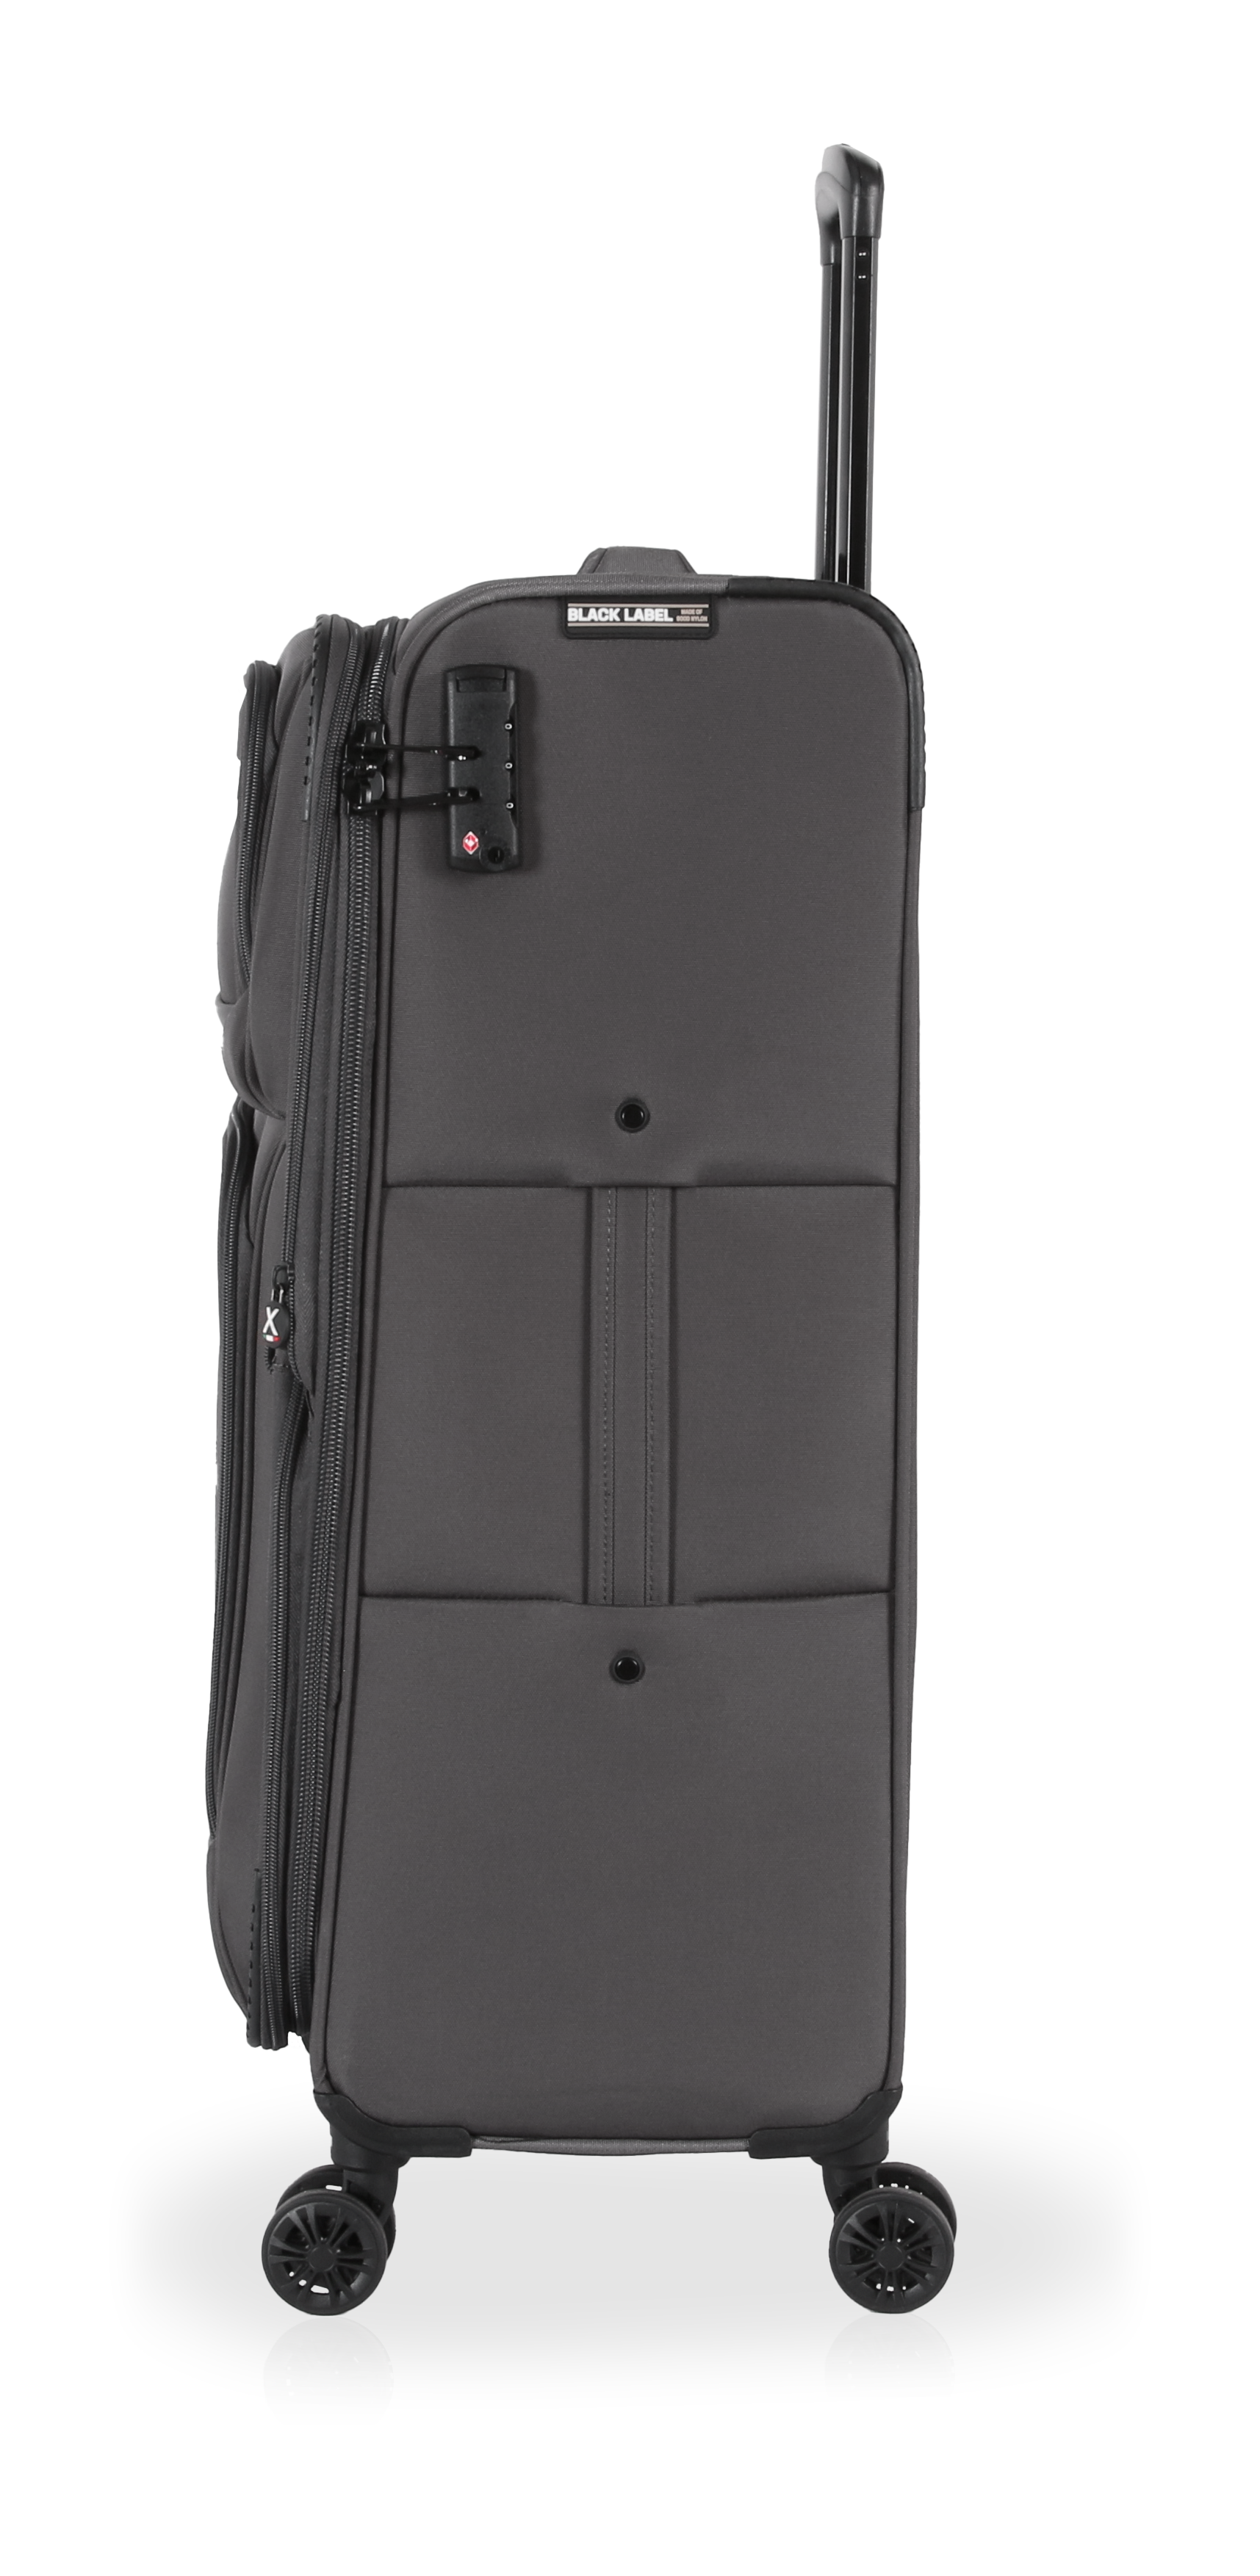 TUCCI Italy SUPREMA (20", 27", 29") Softside Detachable Wheel Luggage Set